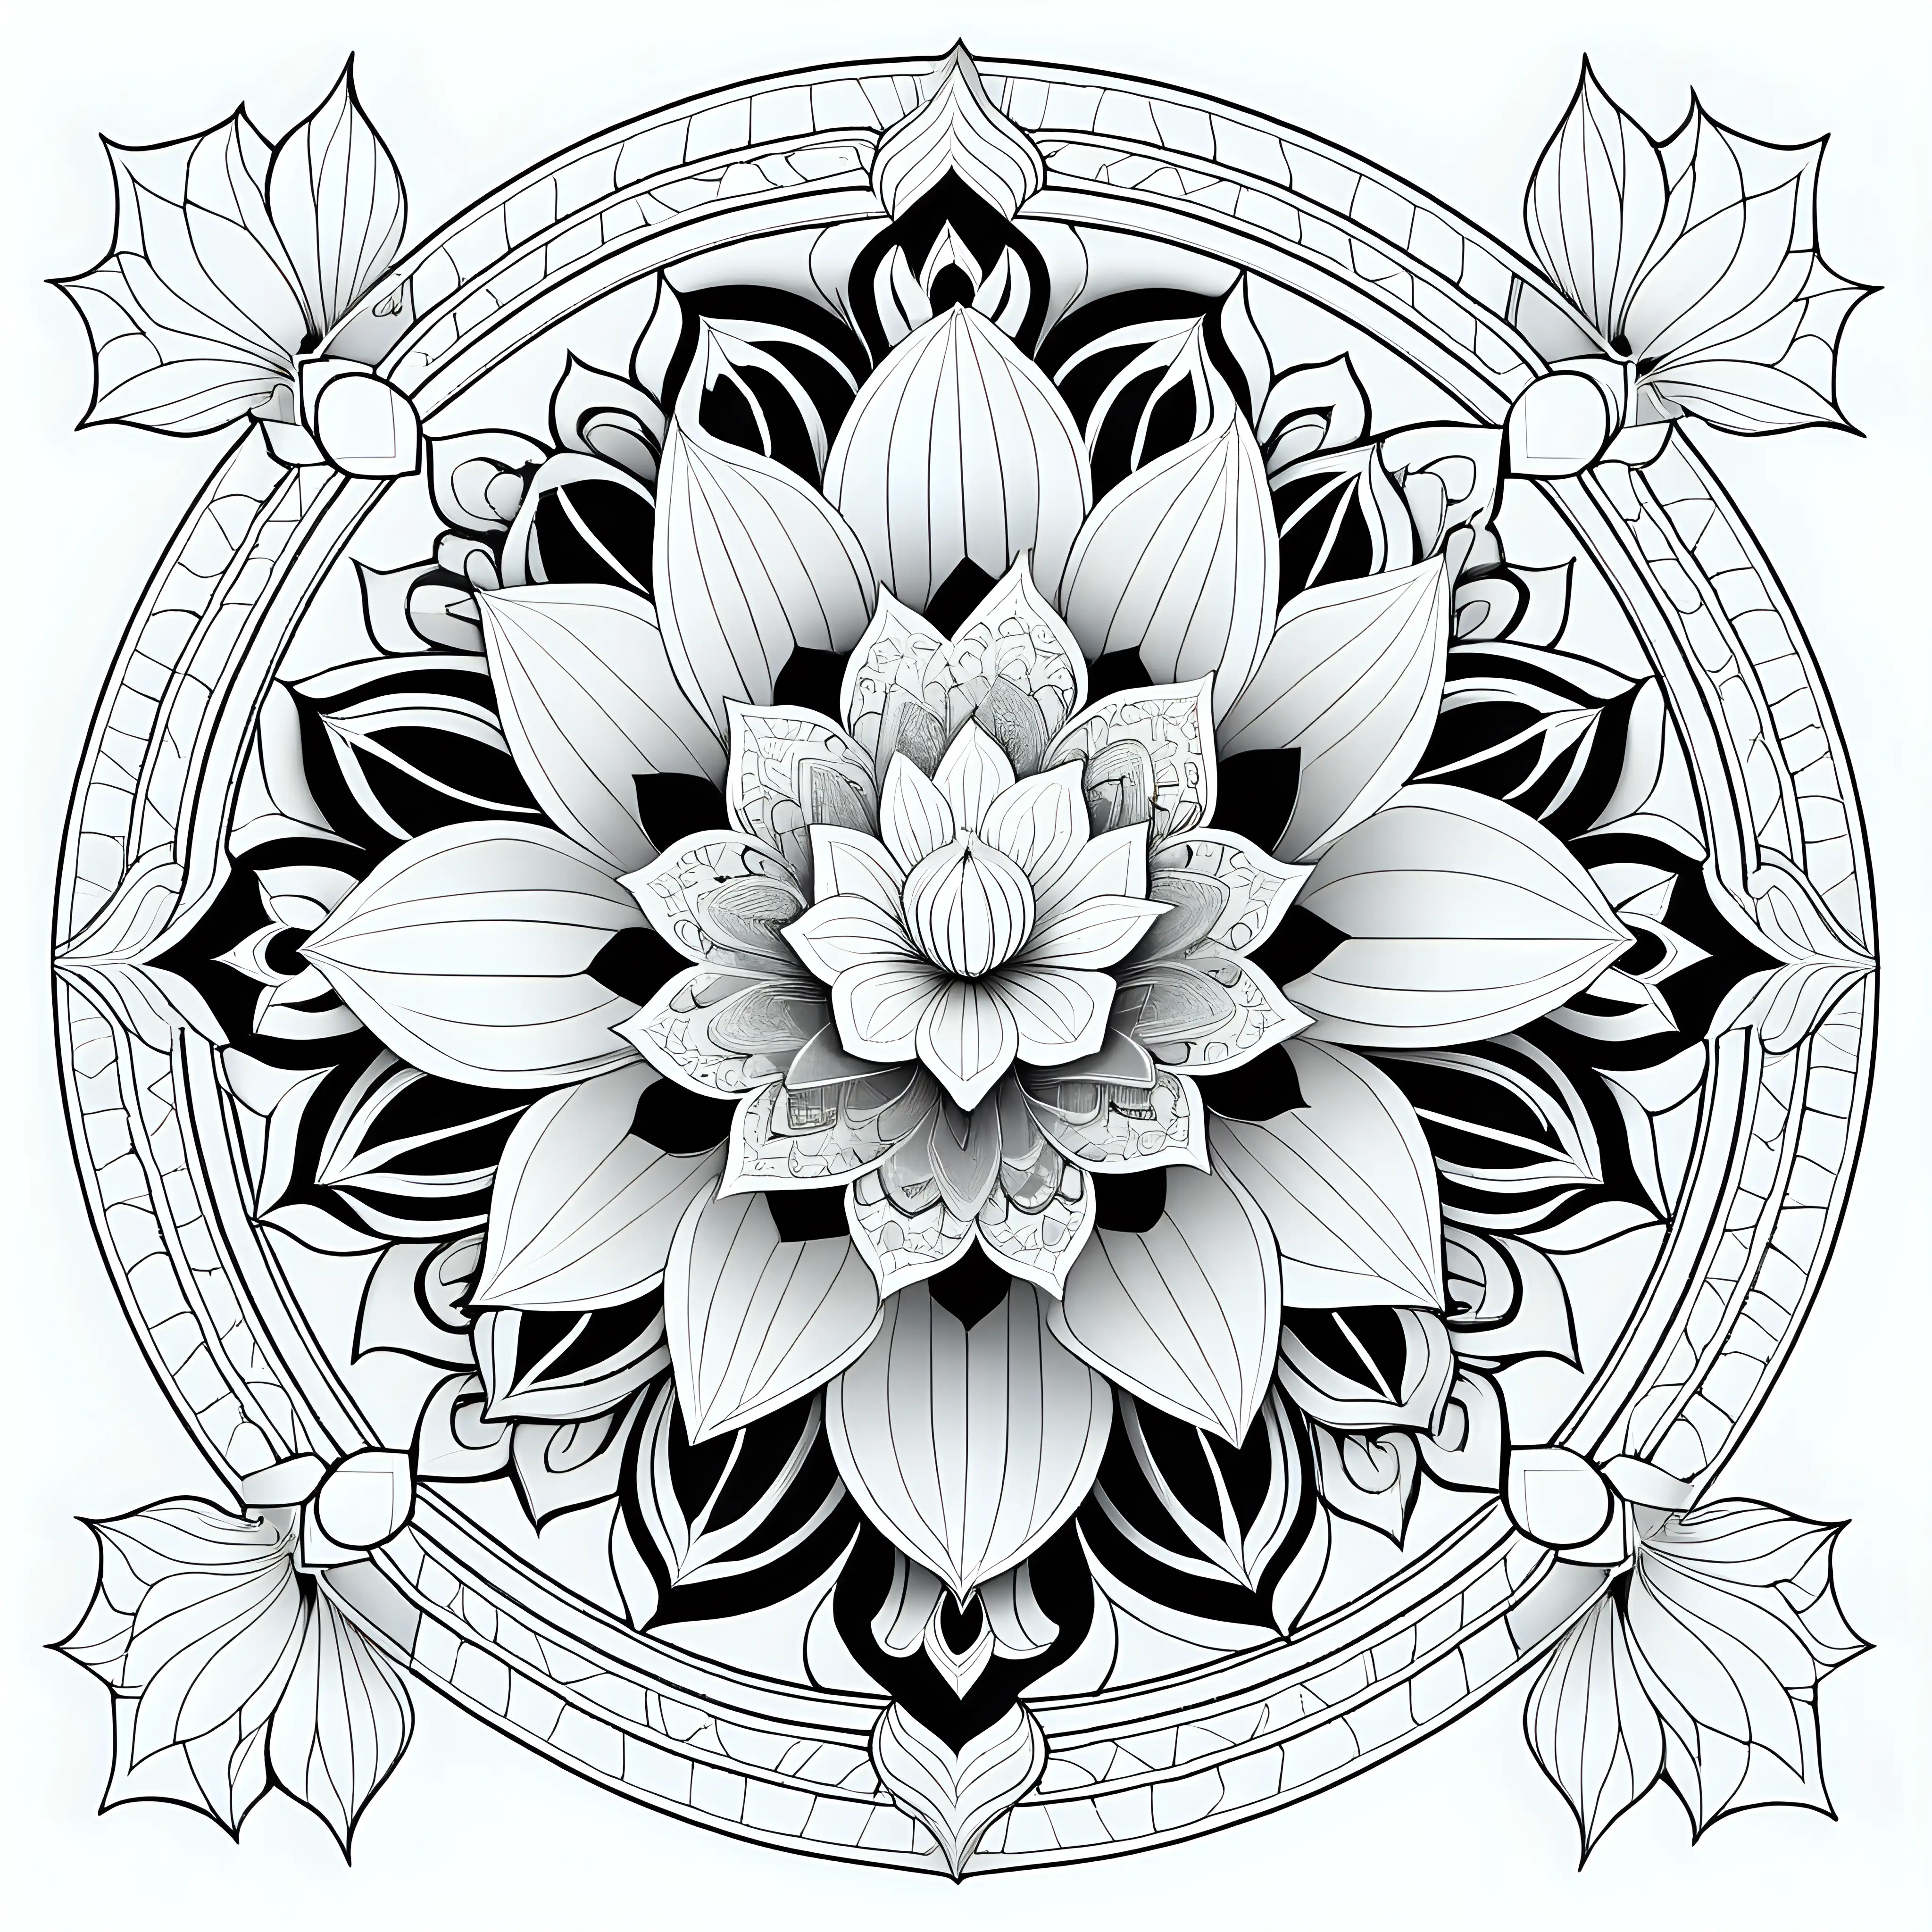 3D Lotus Flower Centered Detailed Mantra